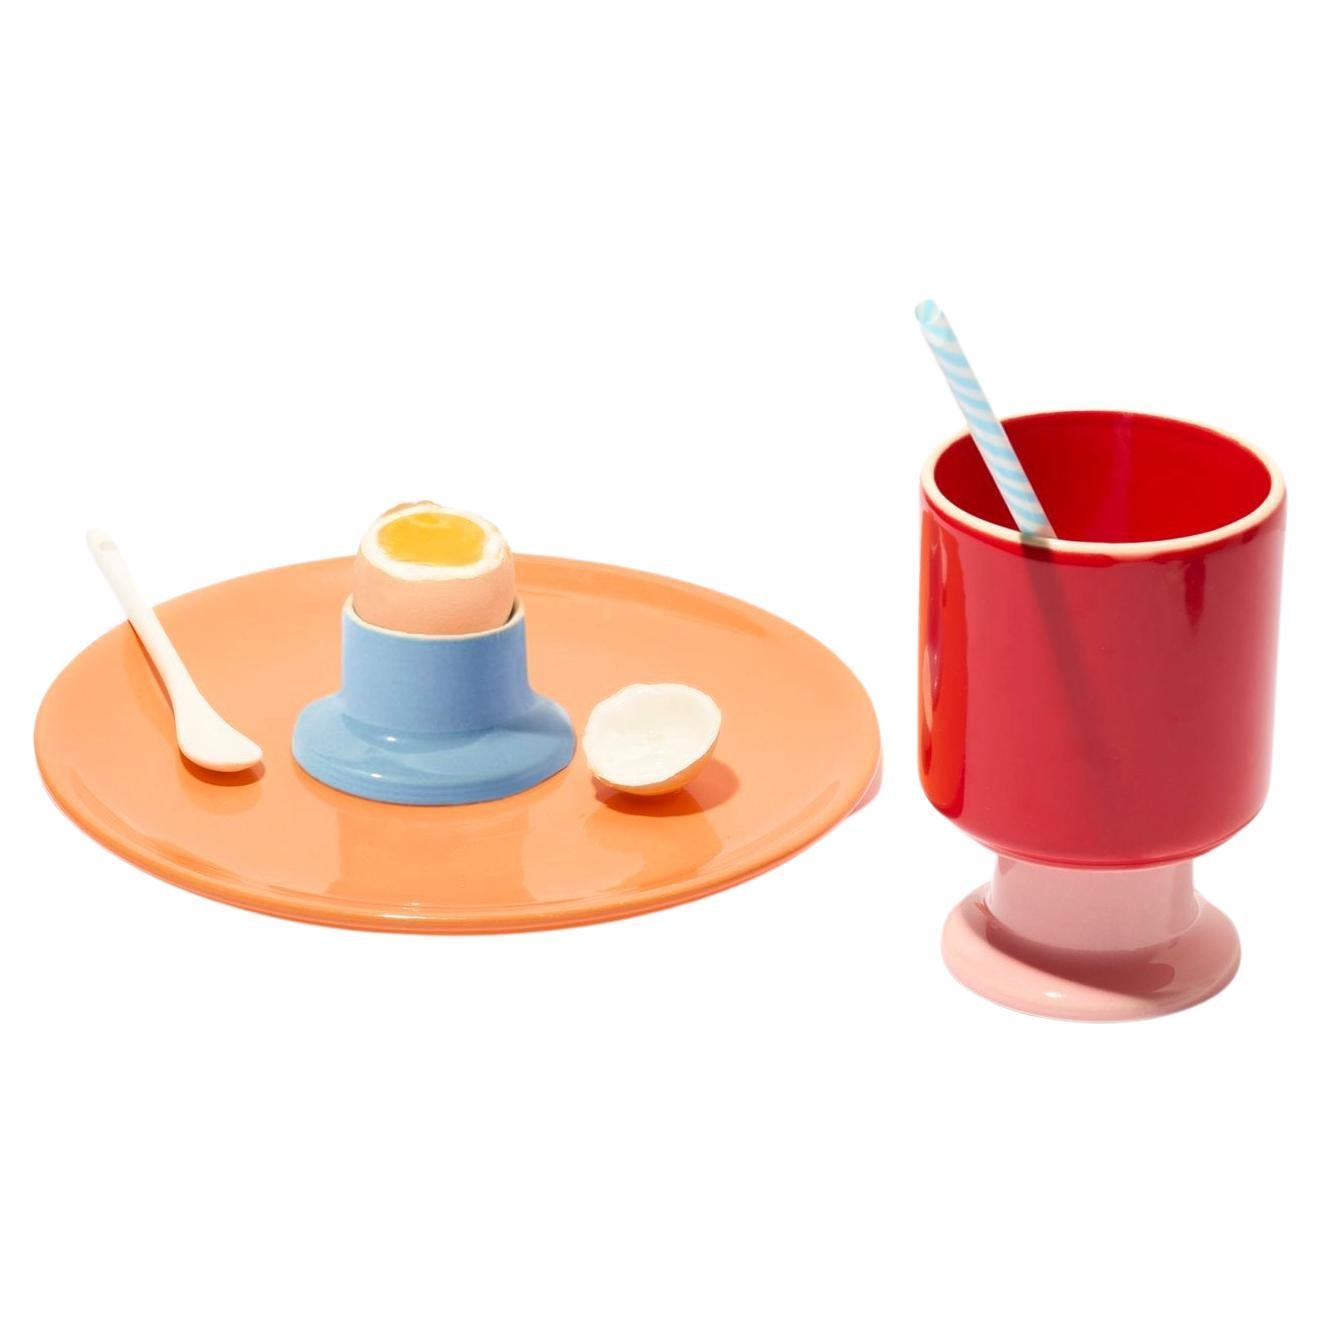 Breakfast set / plate, mug and egg holder by Malwina Konopacka For Sale